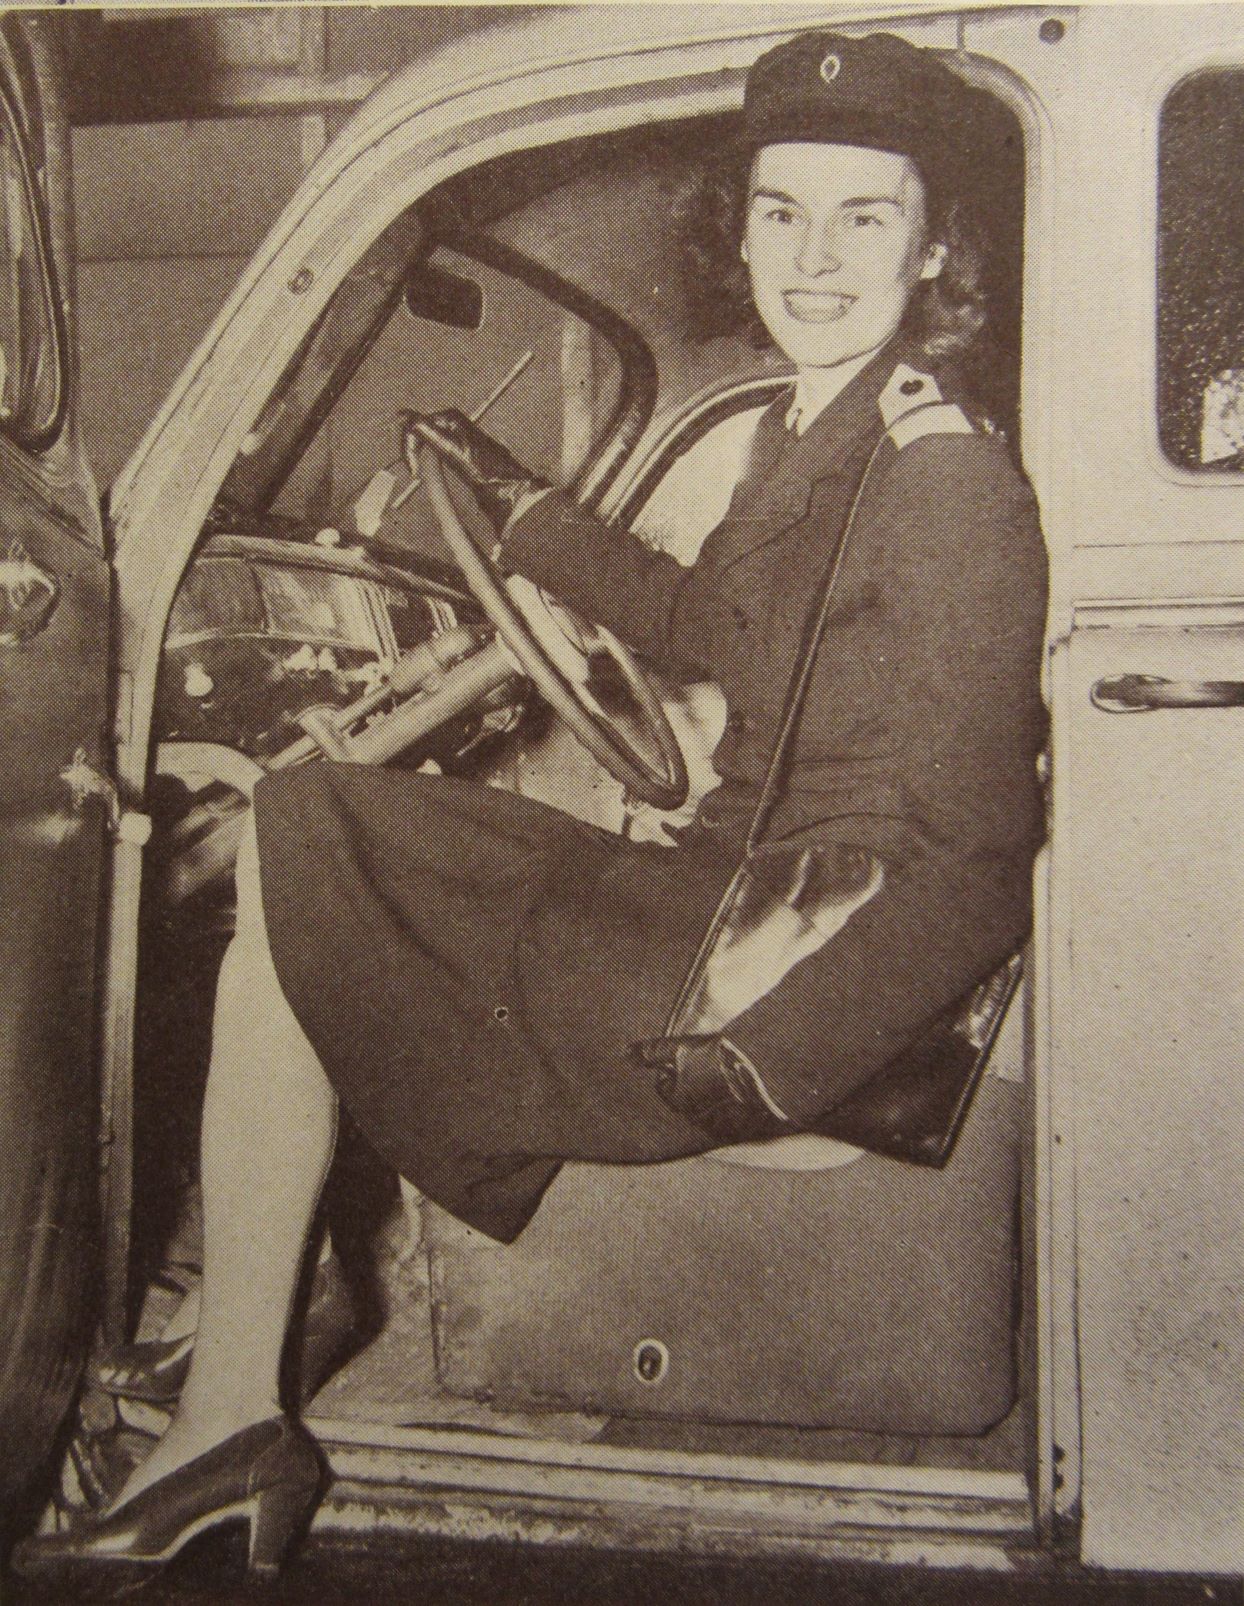 Bomb Girl Helen Gray Fraser - GECO Taxi Driver - Courtesy Archives of Ontario